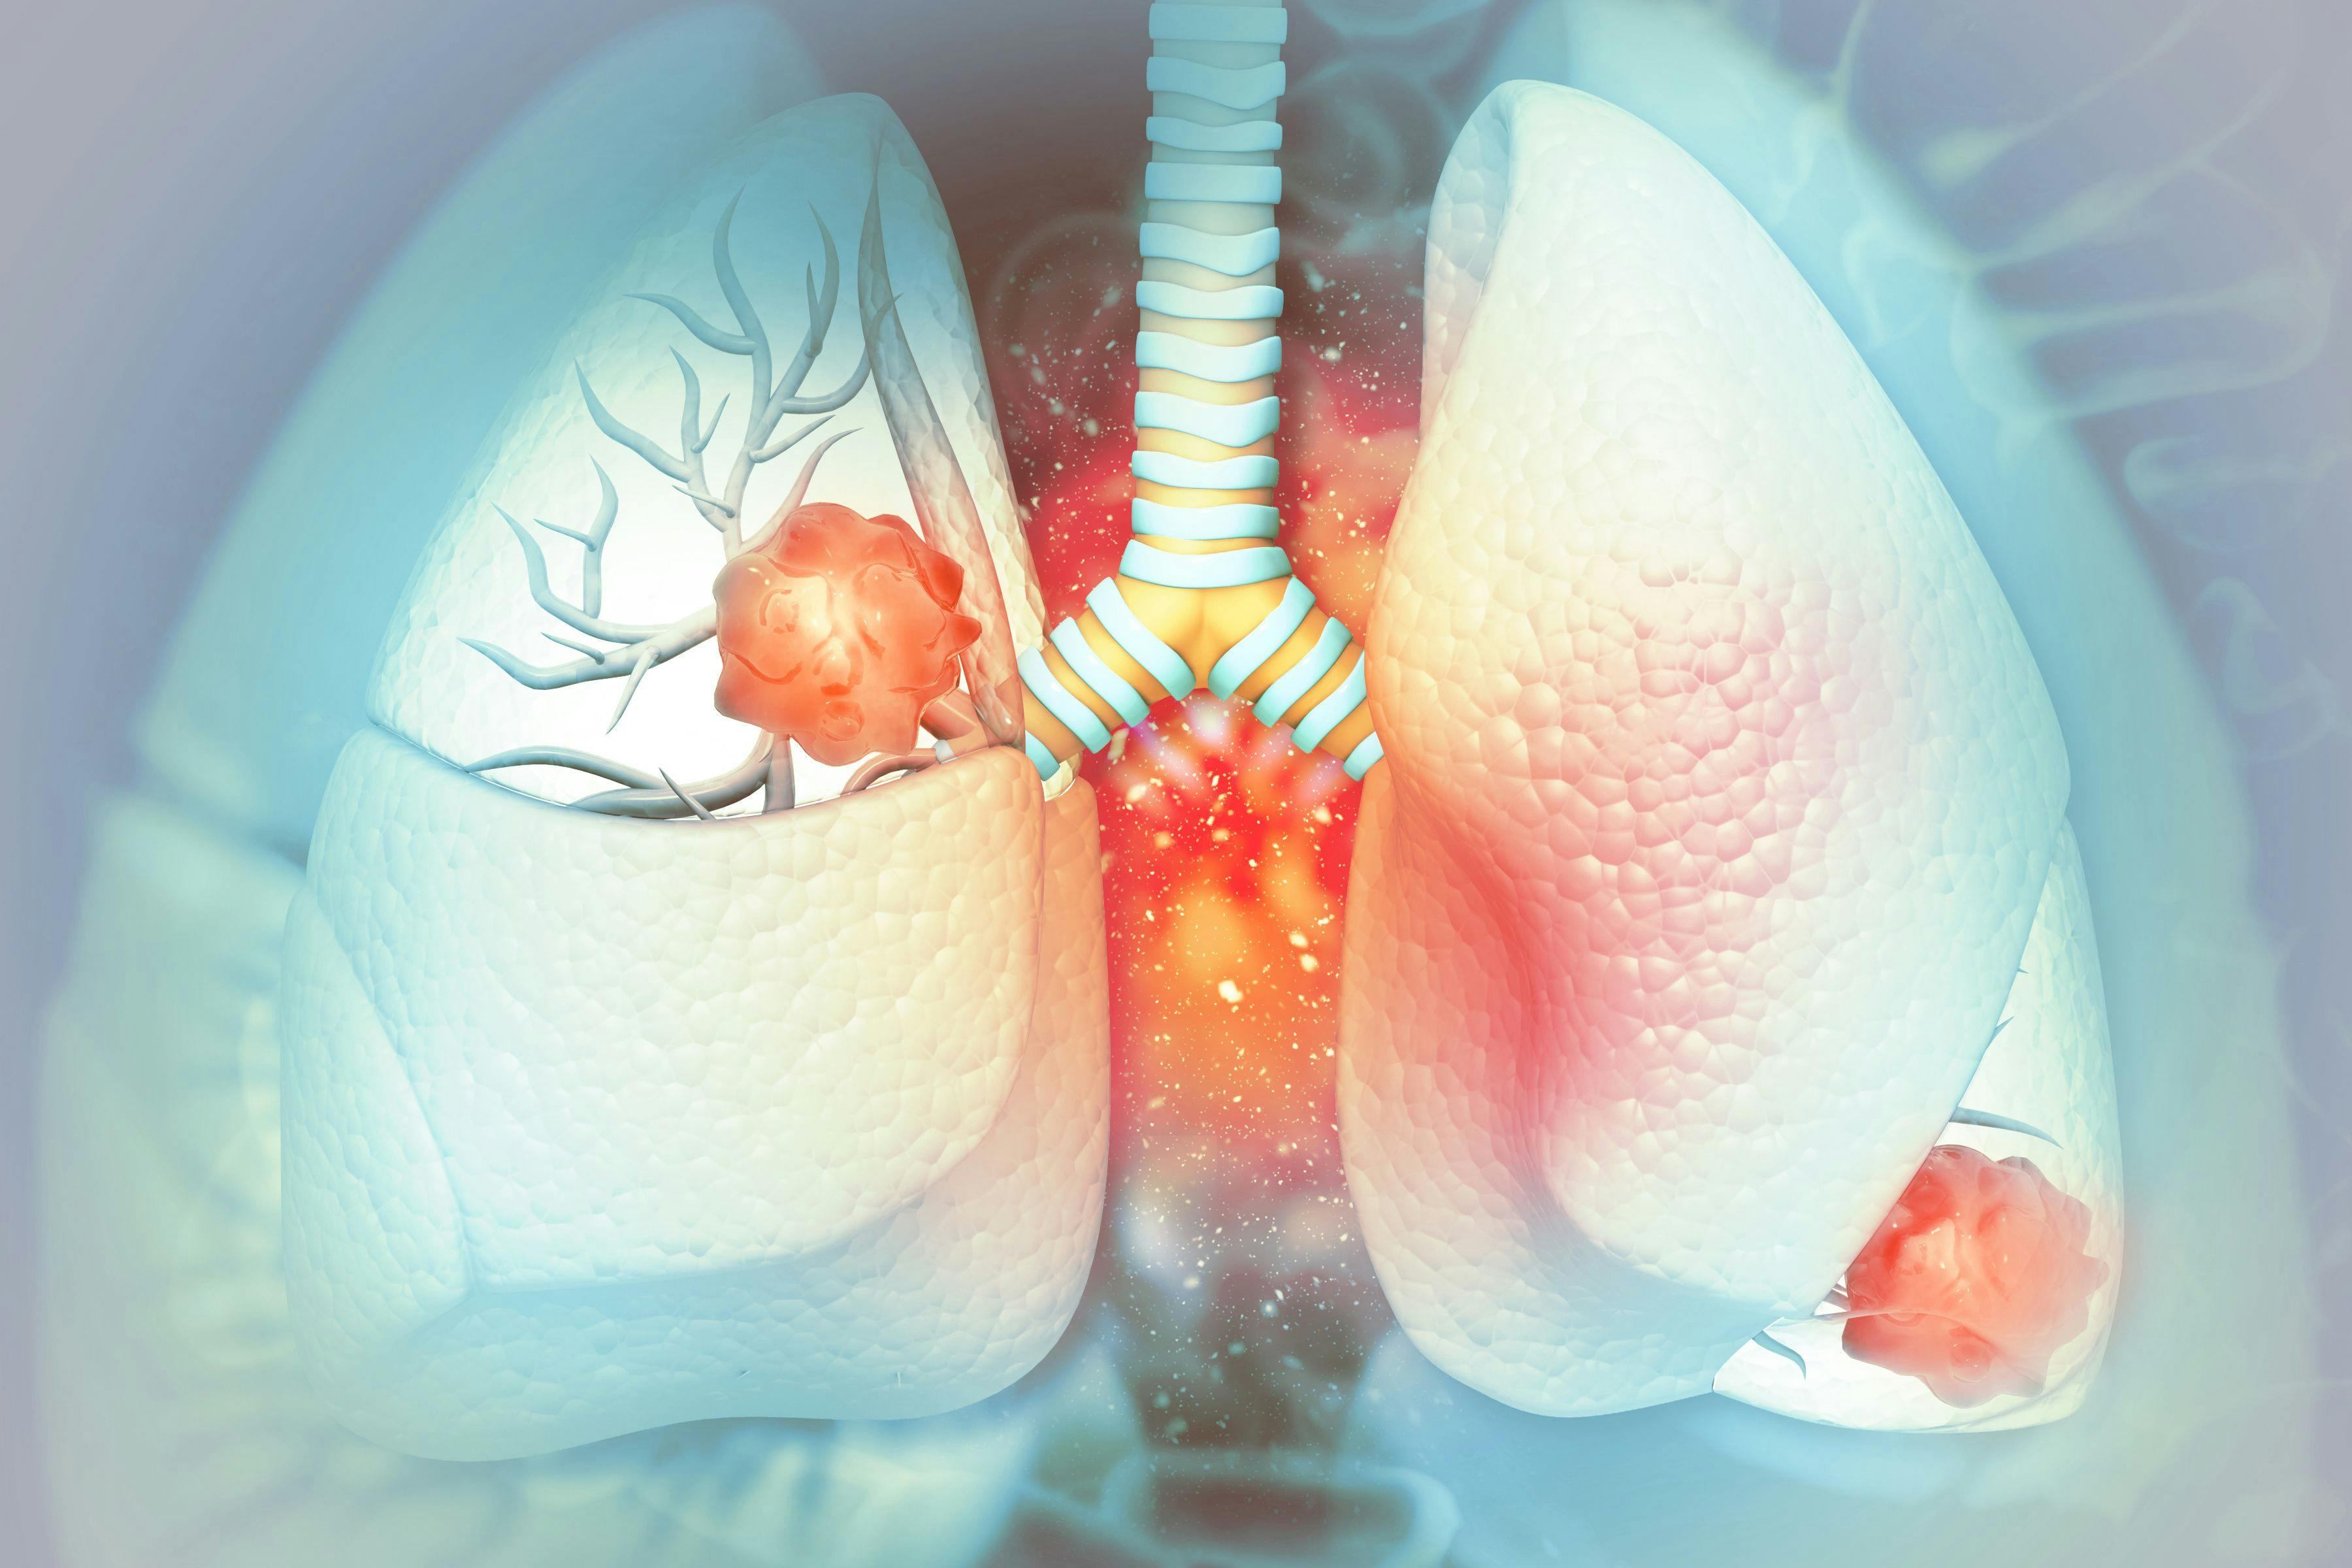 Lung Cancer: ©Crystal Light - stock.adobe.com